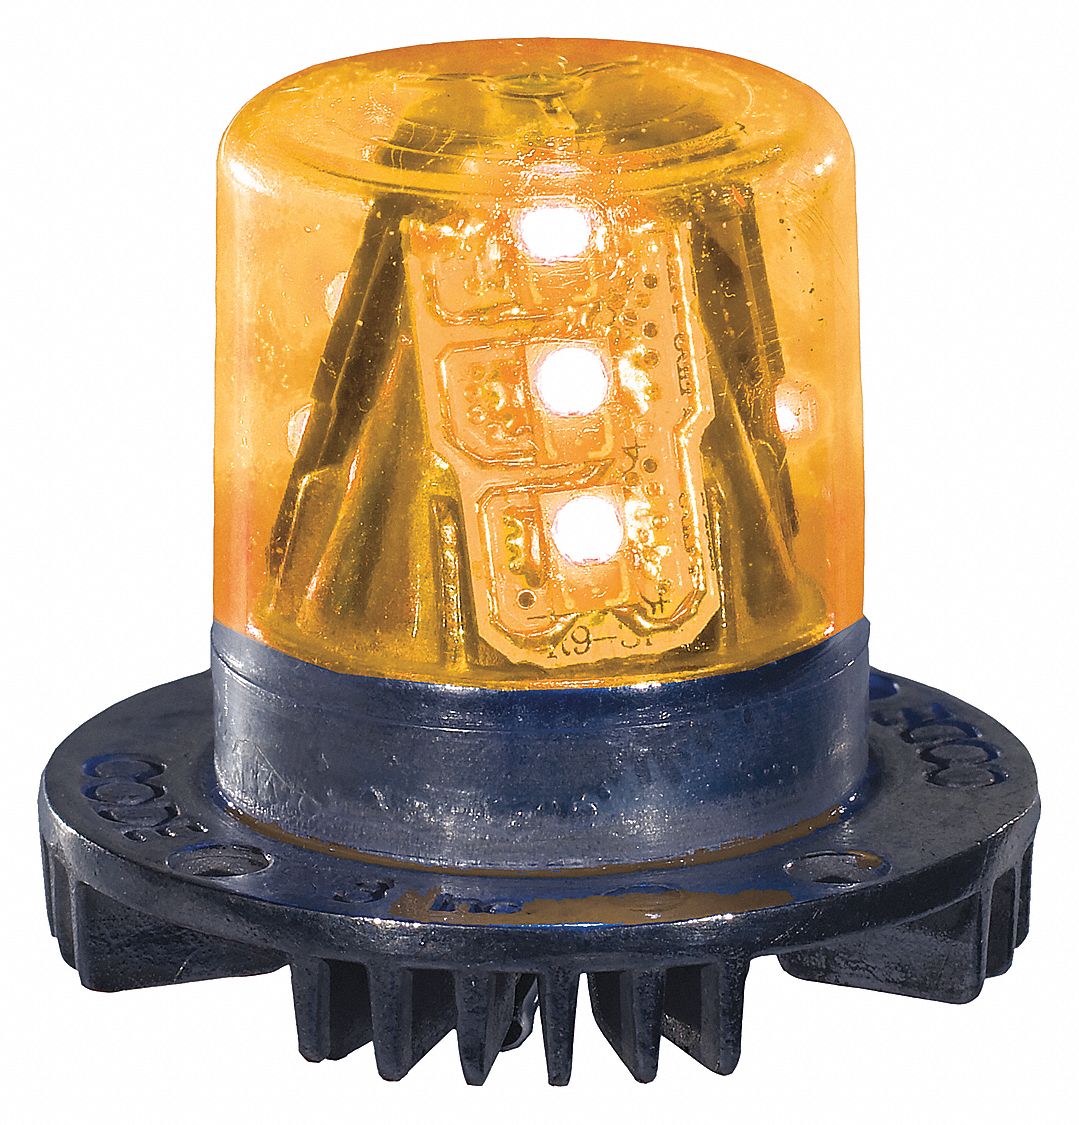 LED Strobe Light Head: LED Strobe Light Head, 30 Flash Patterns - Vehicle Lighting, Permanent, LED